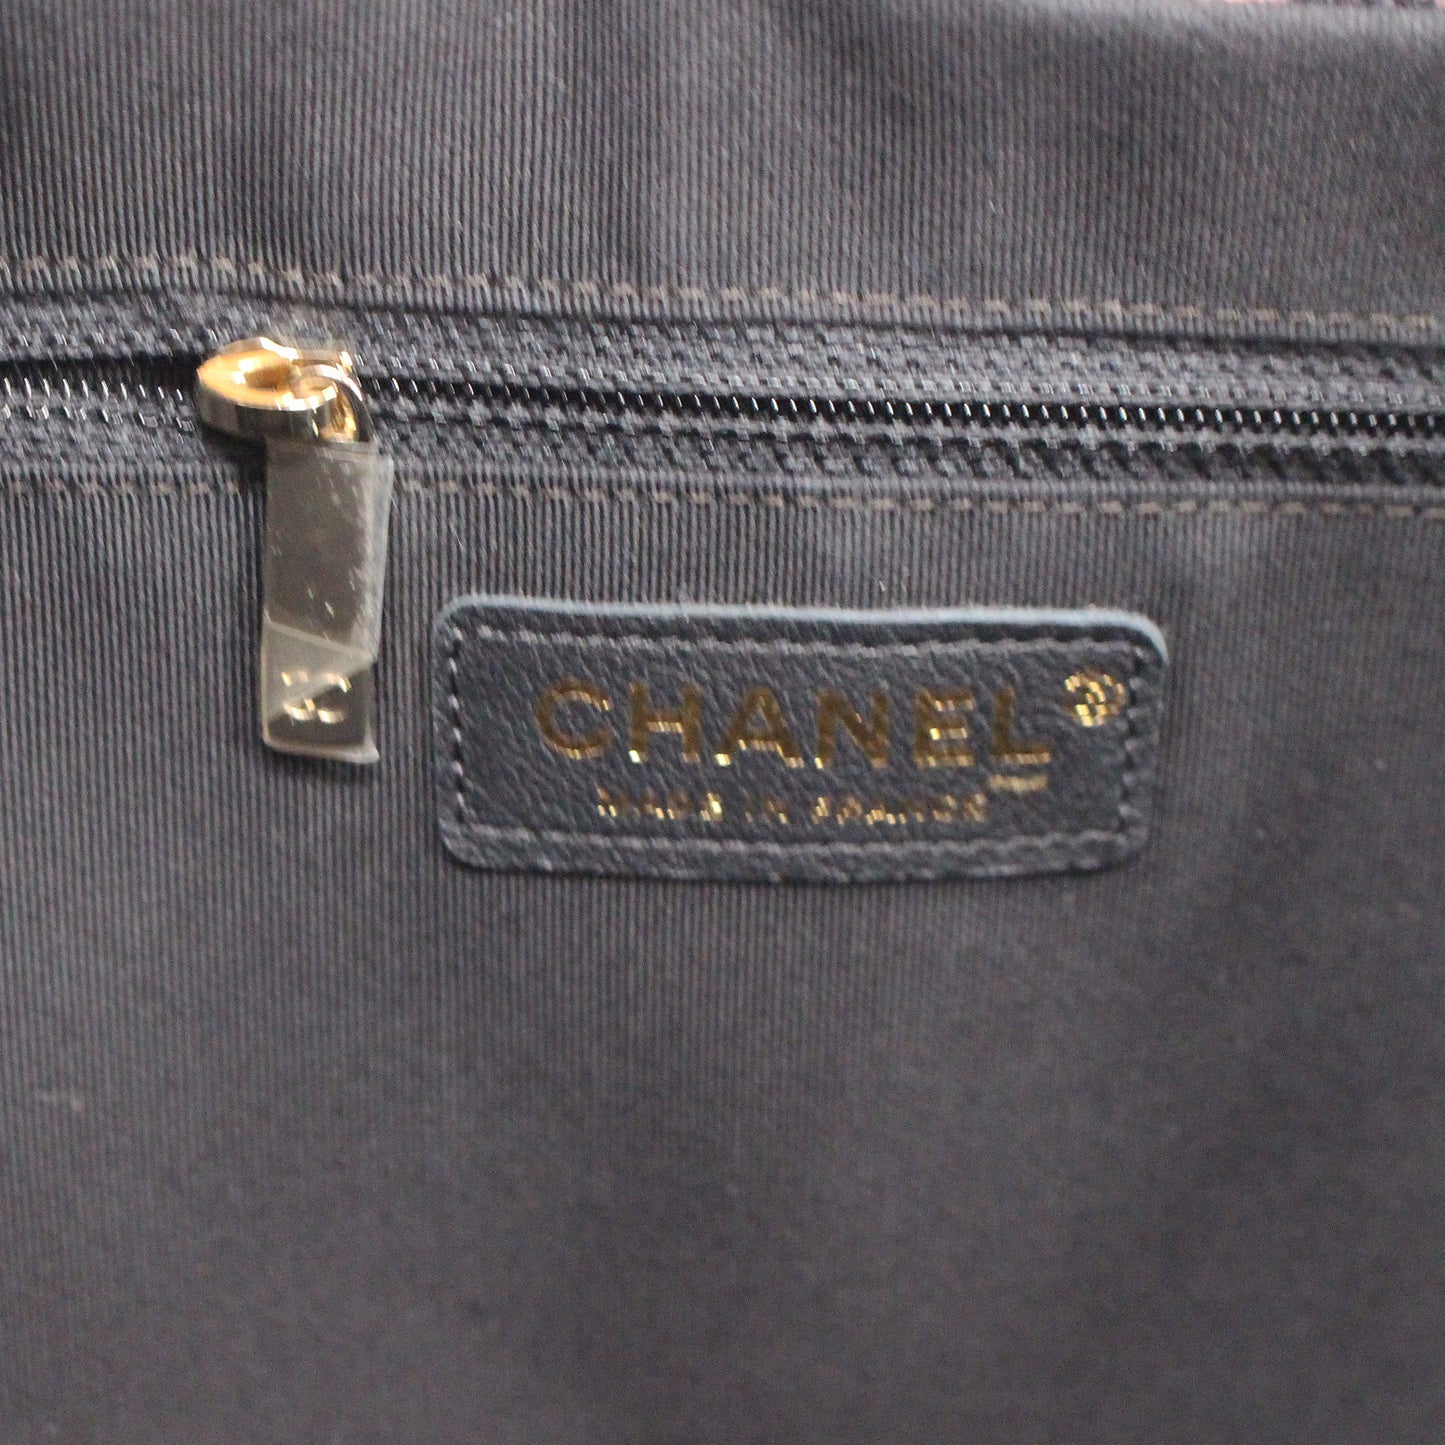 Chanel Scarf Corduroy Camellia Tote Bag